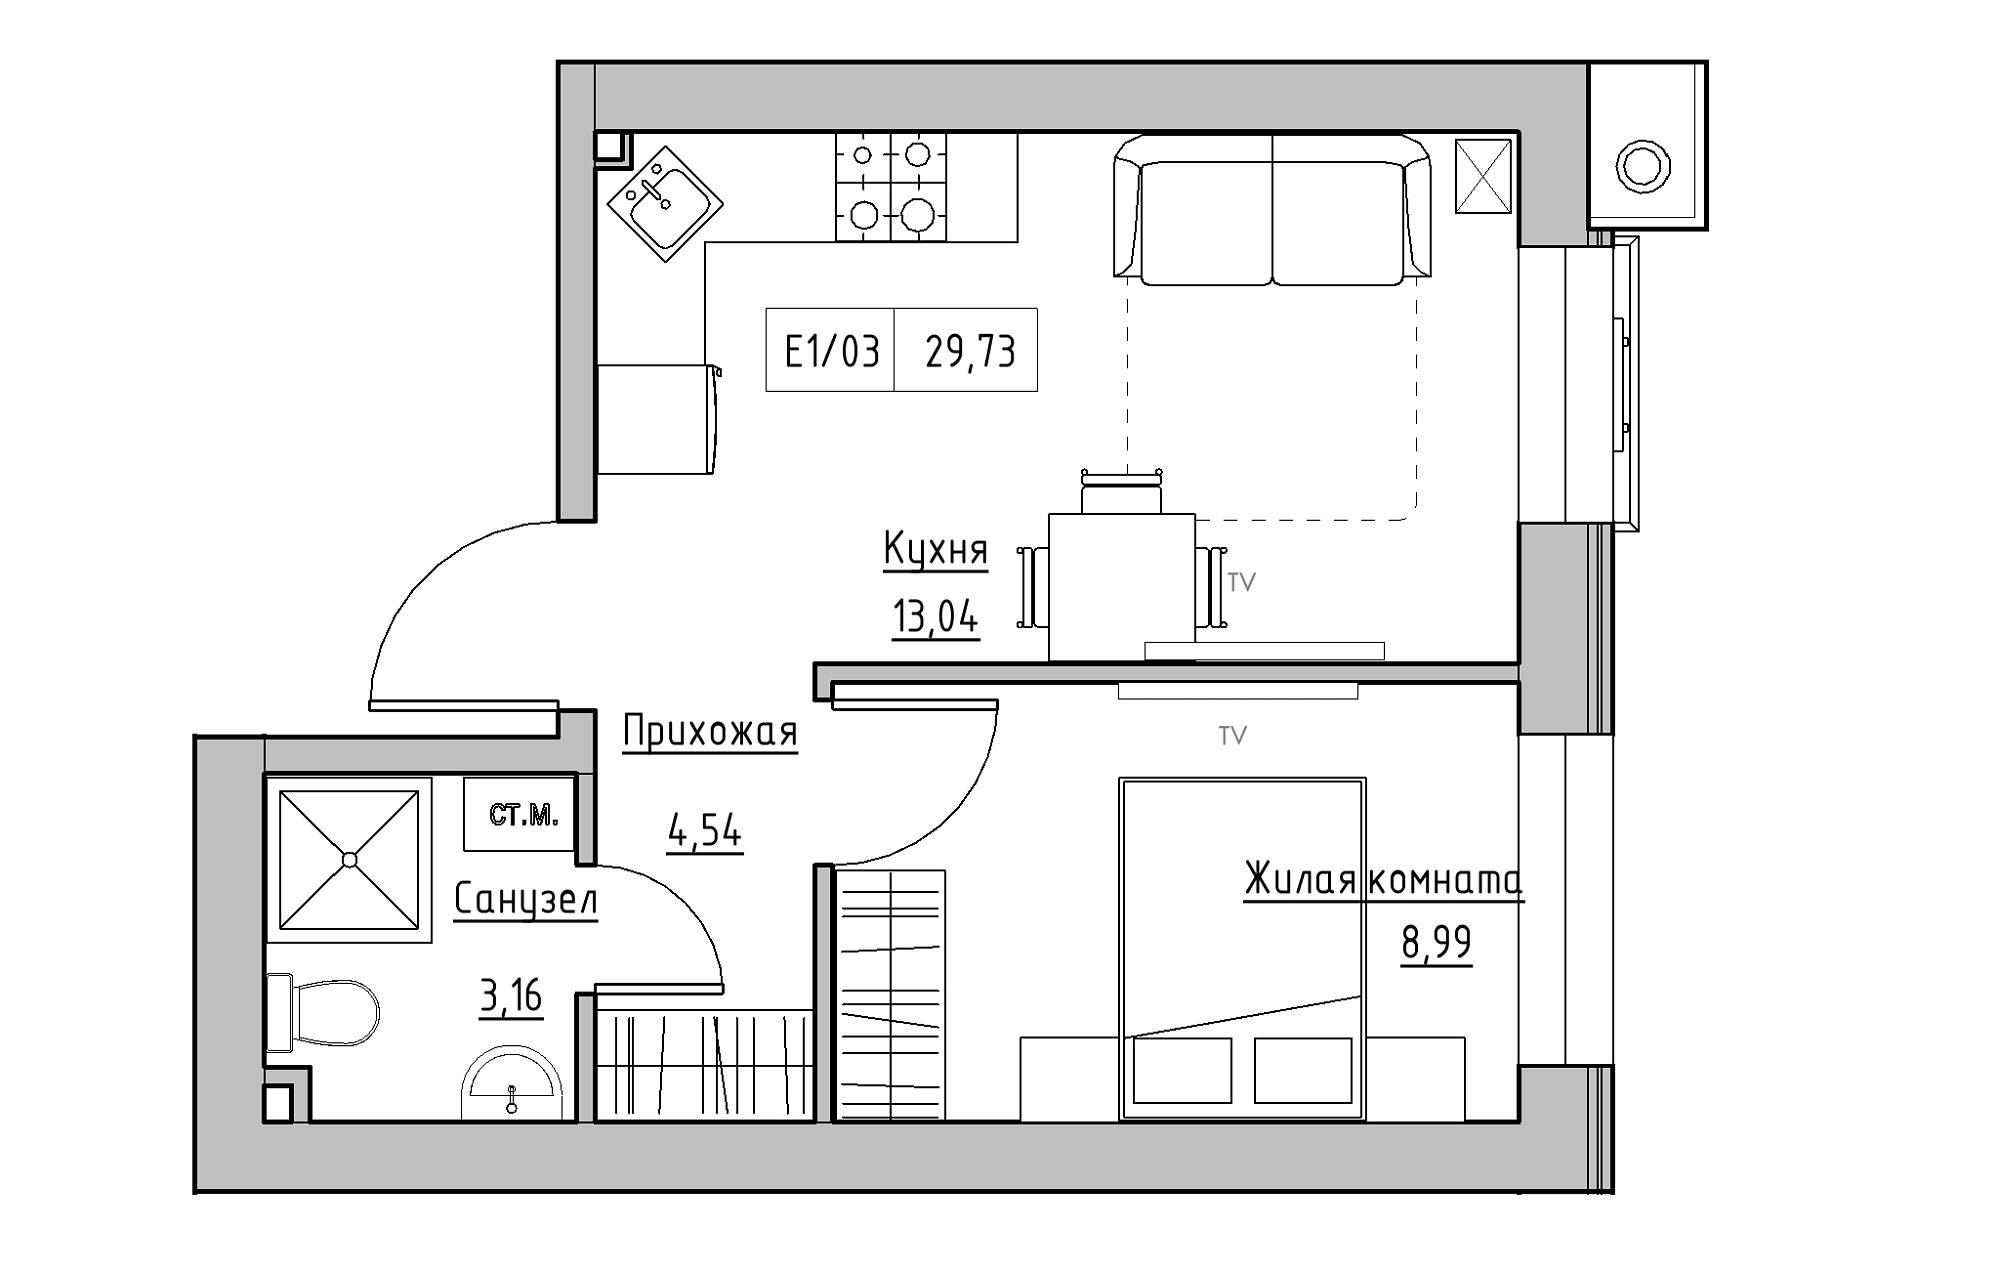 Planning 1-rm flats area 29.73m2, KS-013-01/0002.